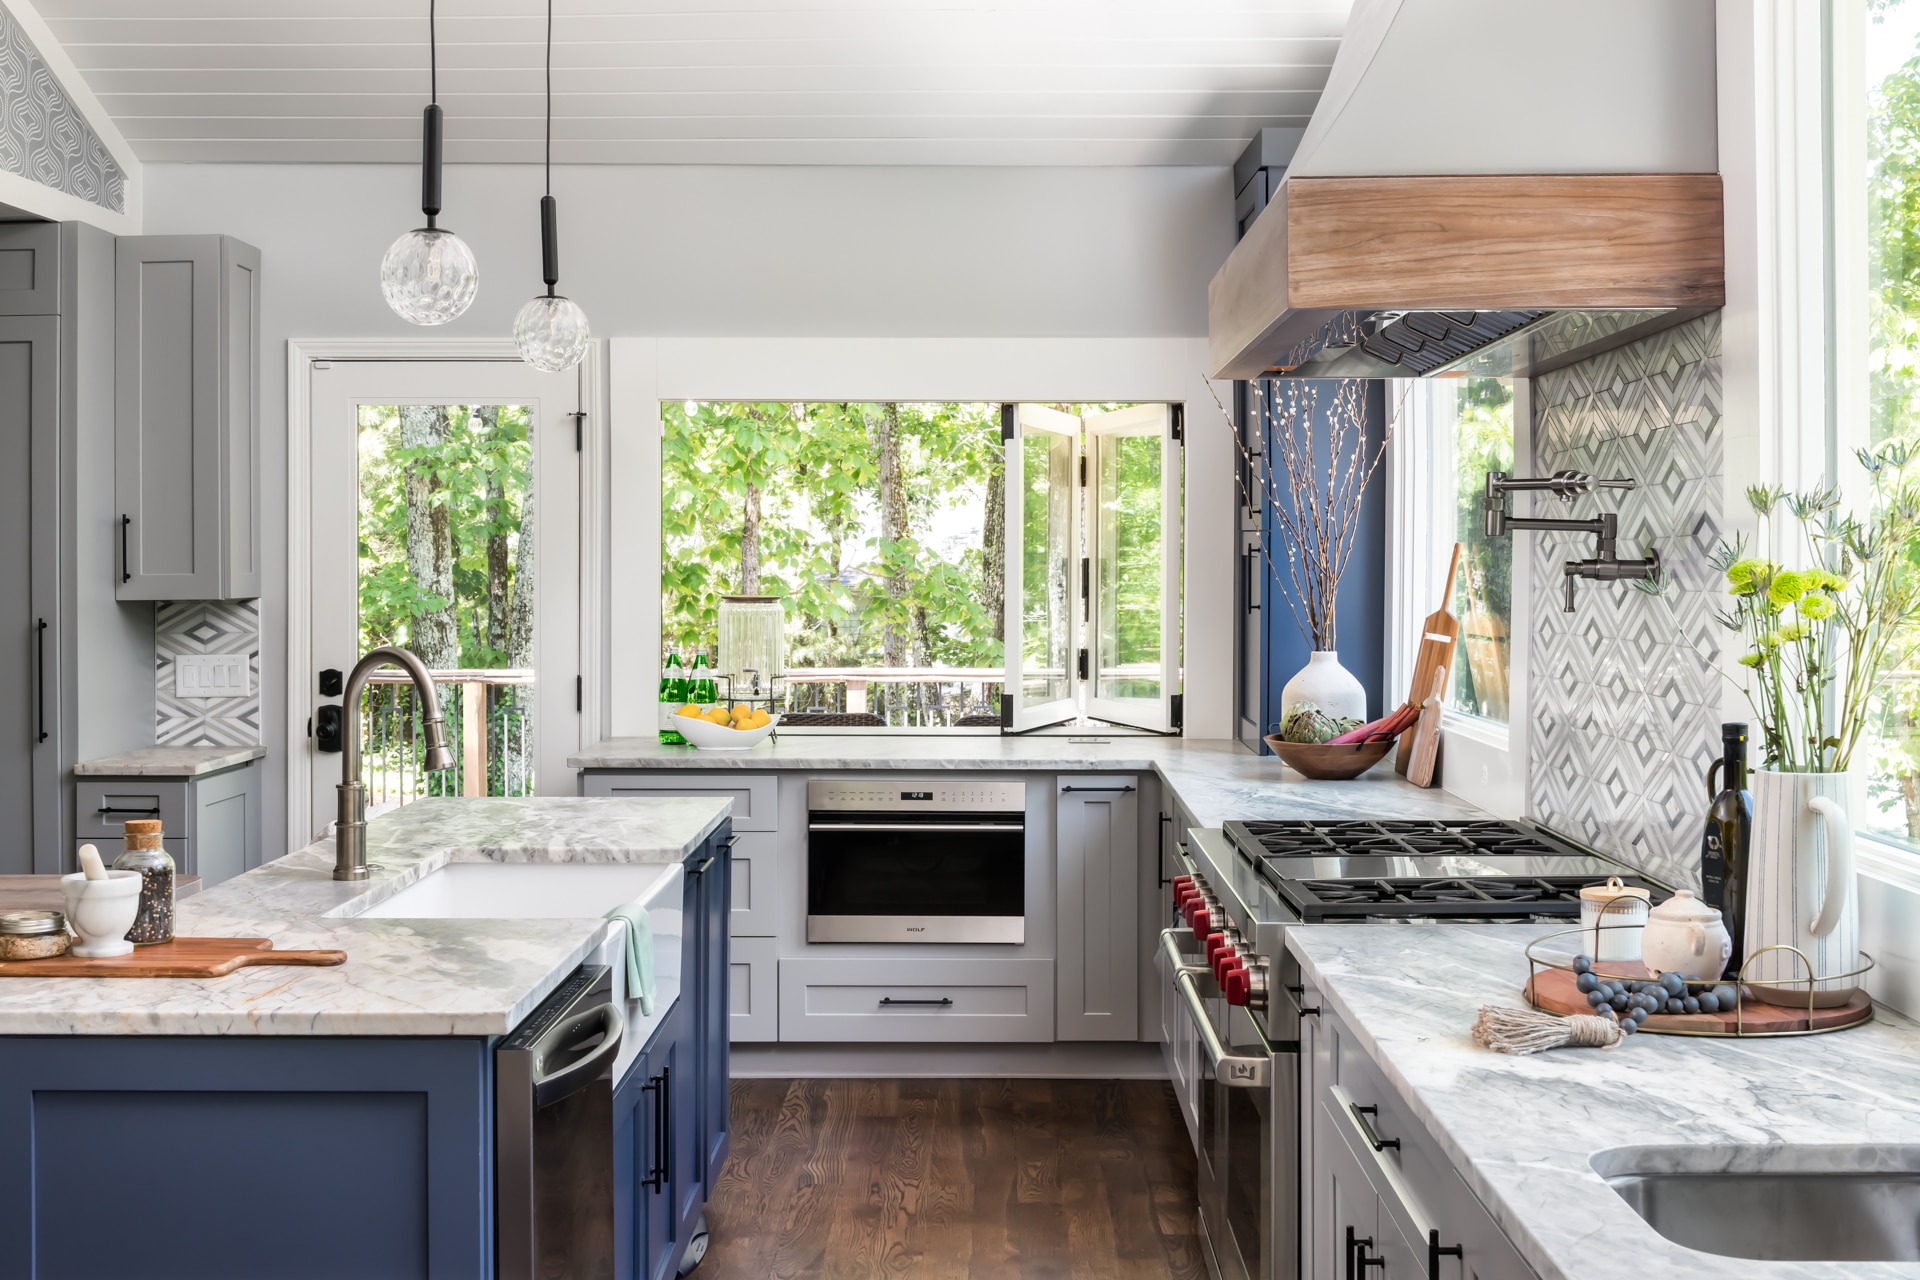 Transitional kitchen with white cabinets, dark blue island, granite countertops, and diamond geometric tile backsplash.